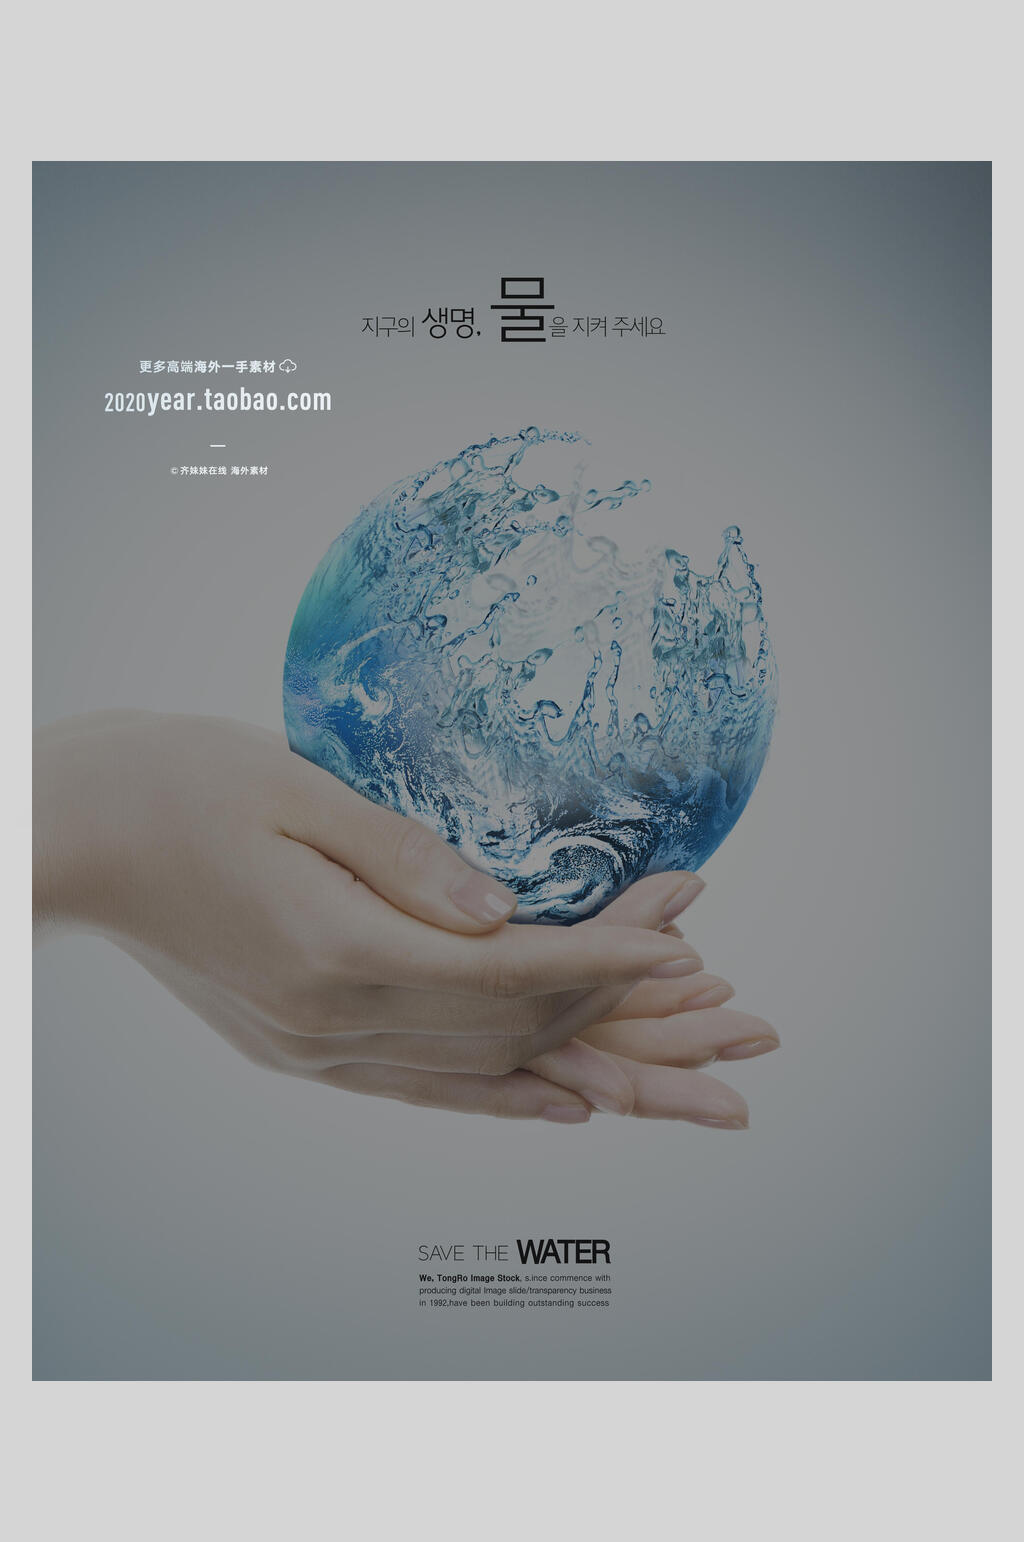 savewater海报图片